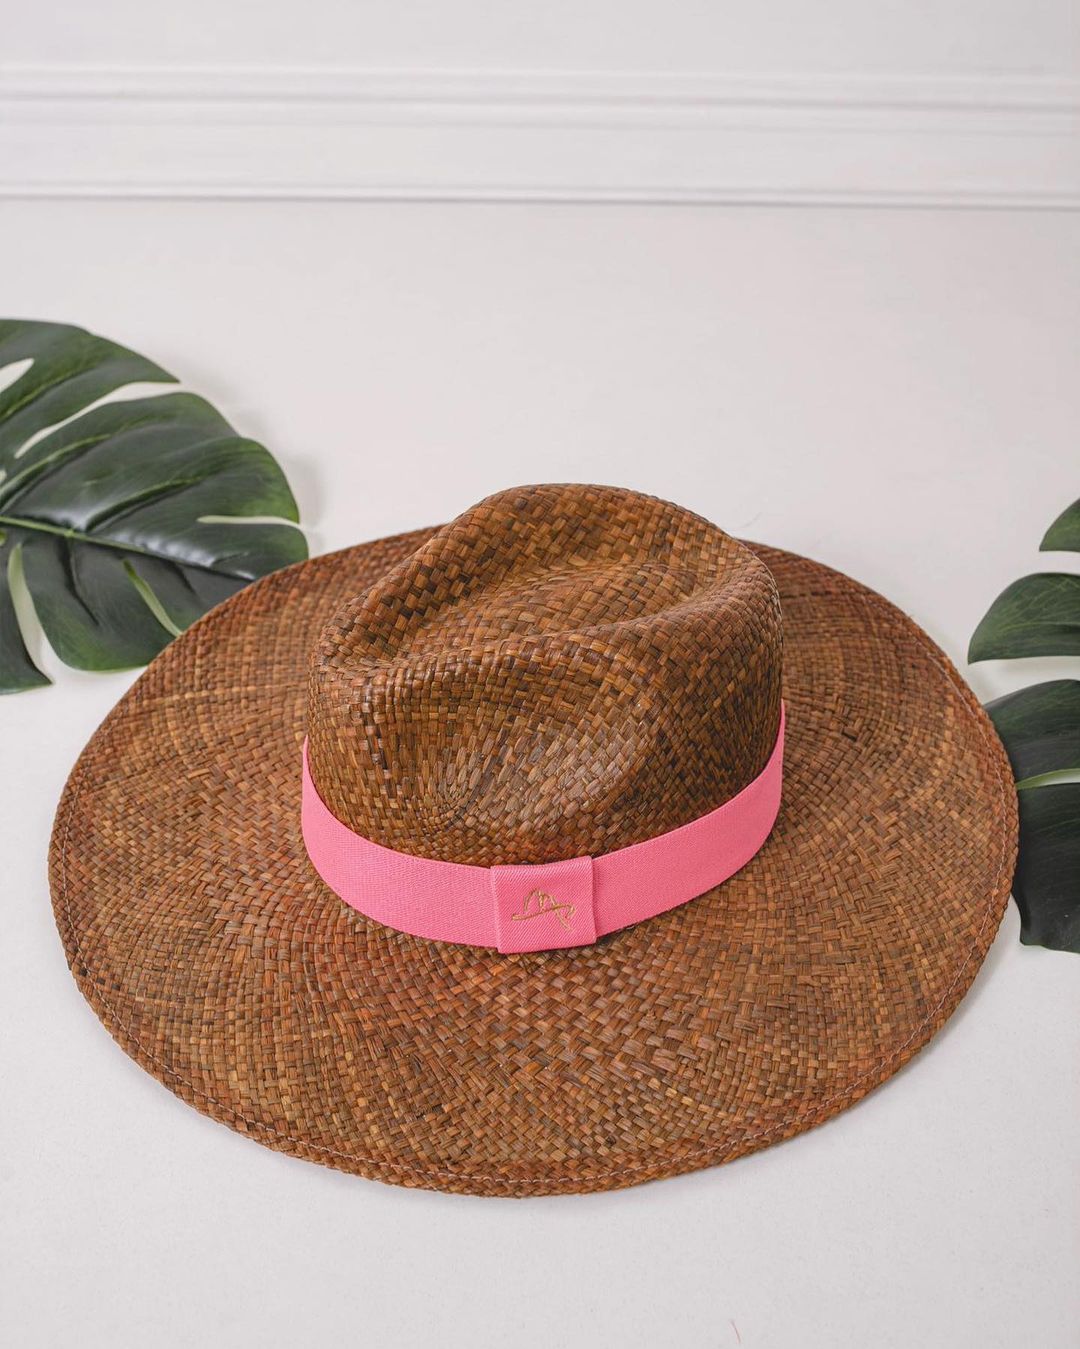 Imagem mostra chapéu na moda - Panamá